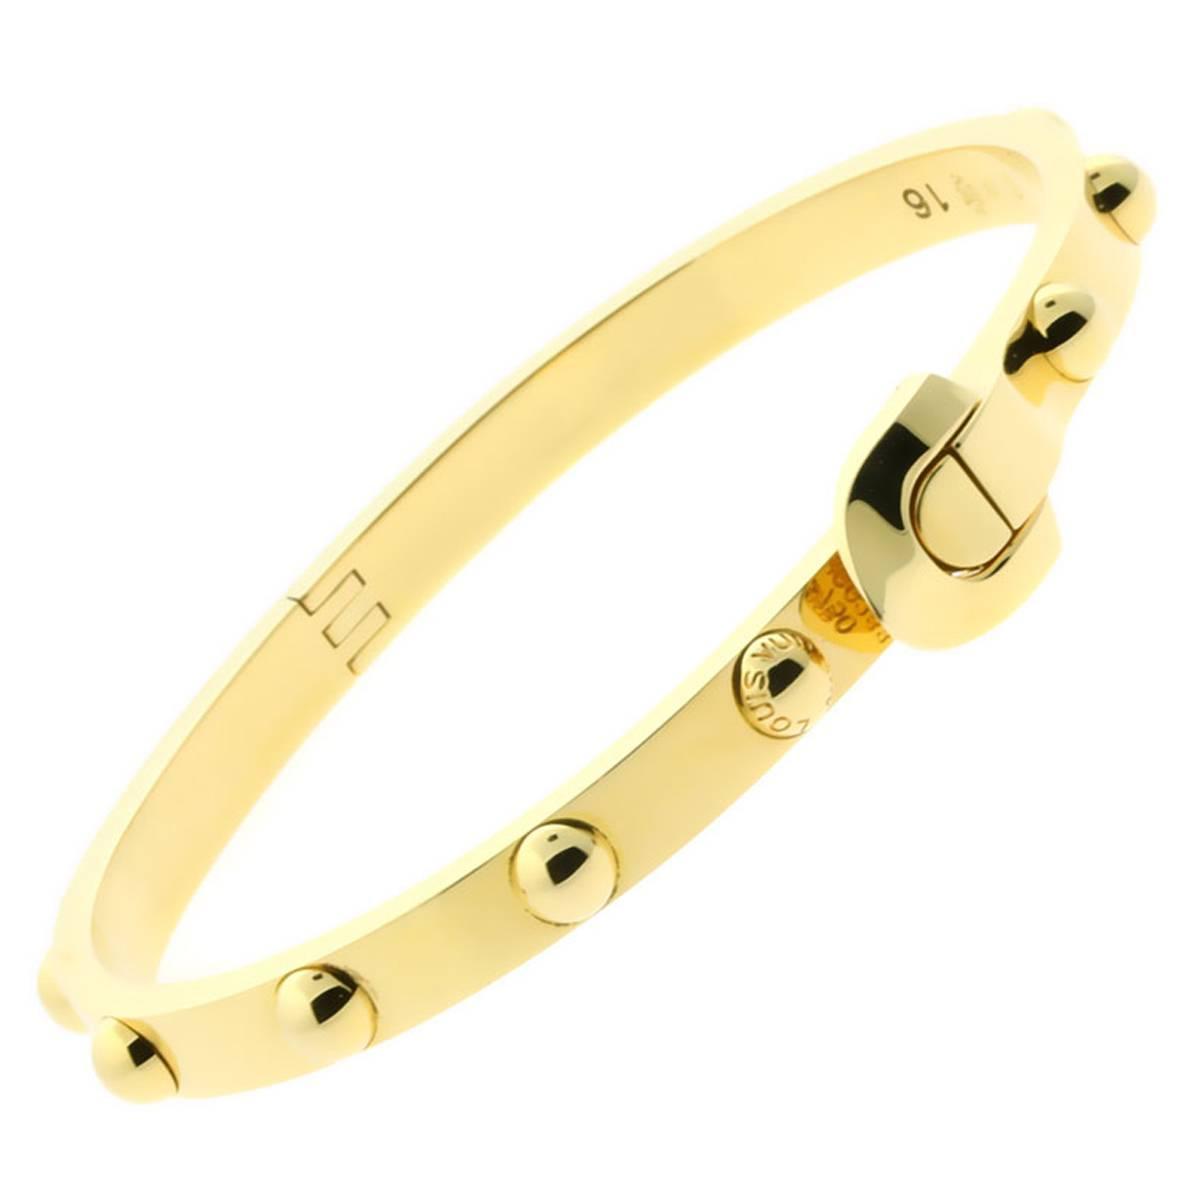 Louis Vuitton Gold Bangle Bracelet at 1stdibs